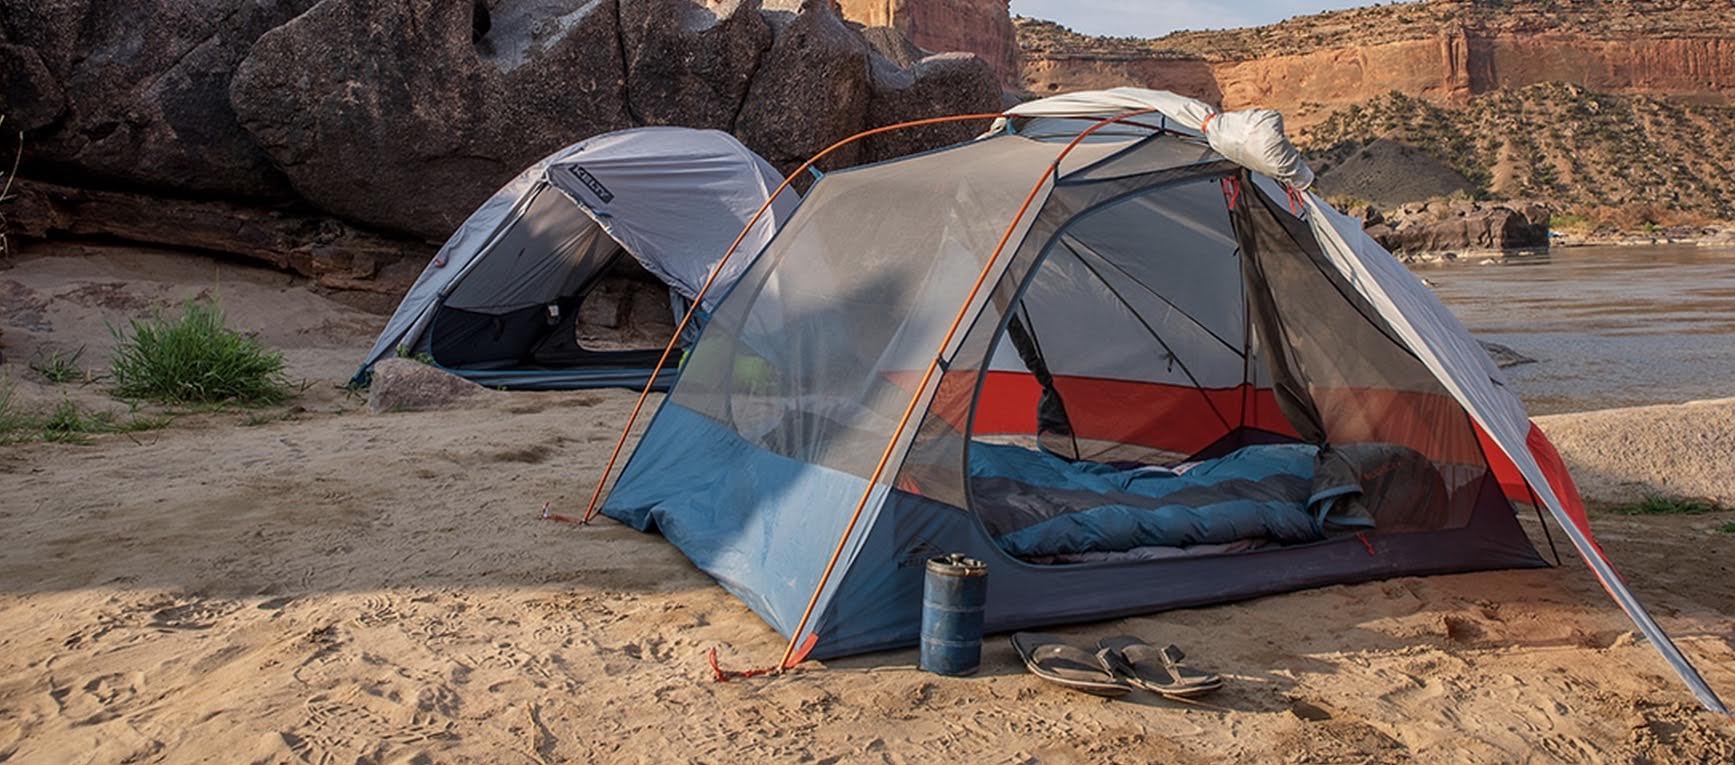 Fun Ways to Enjoy a Camping Staycation